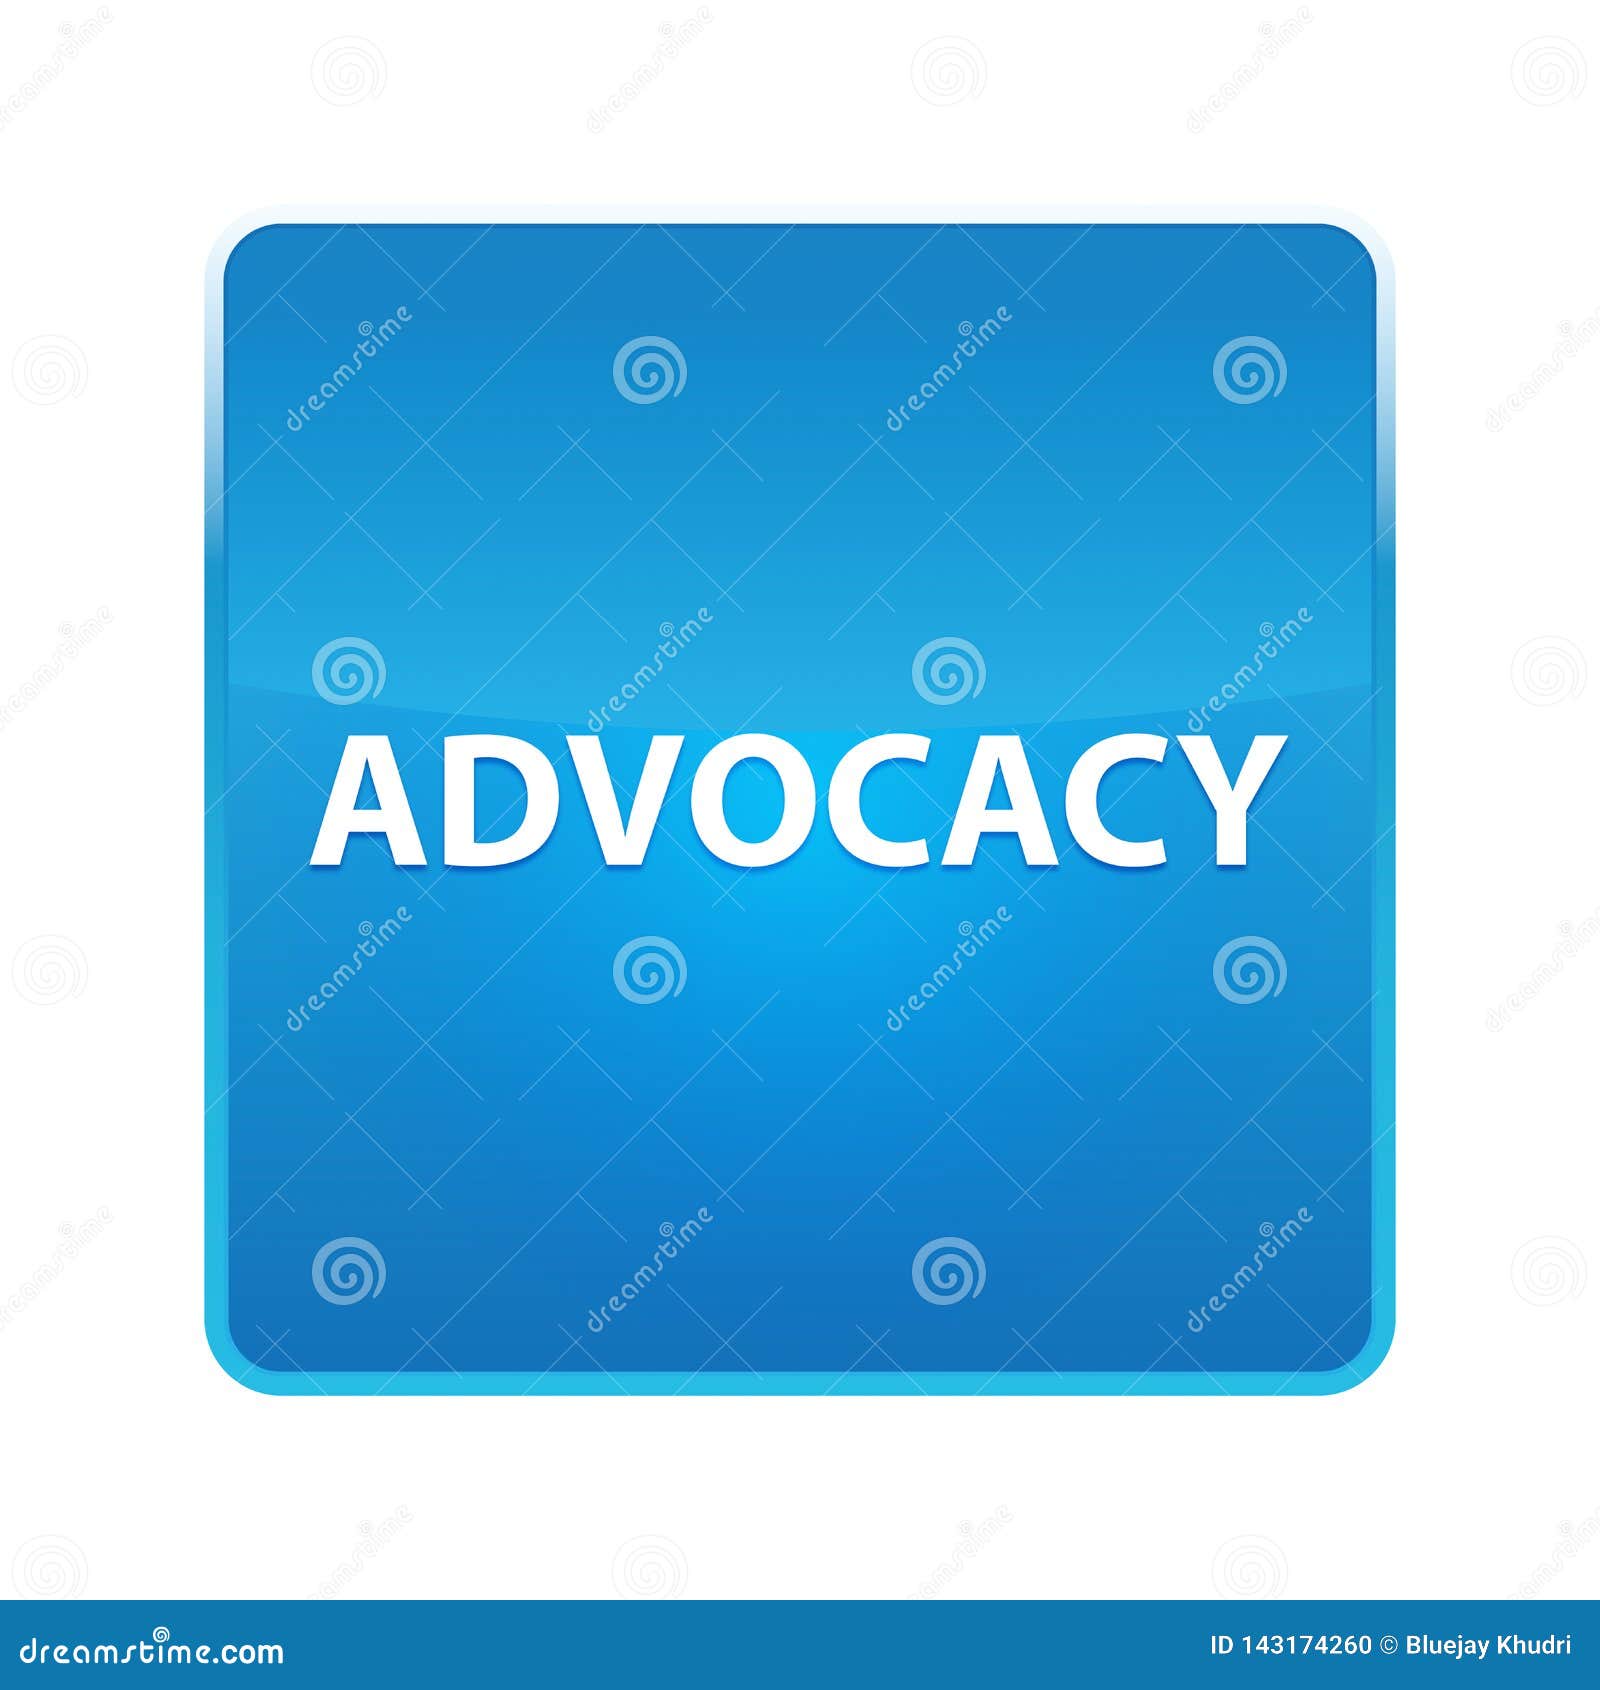 advocacy shiny blue square button